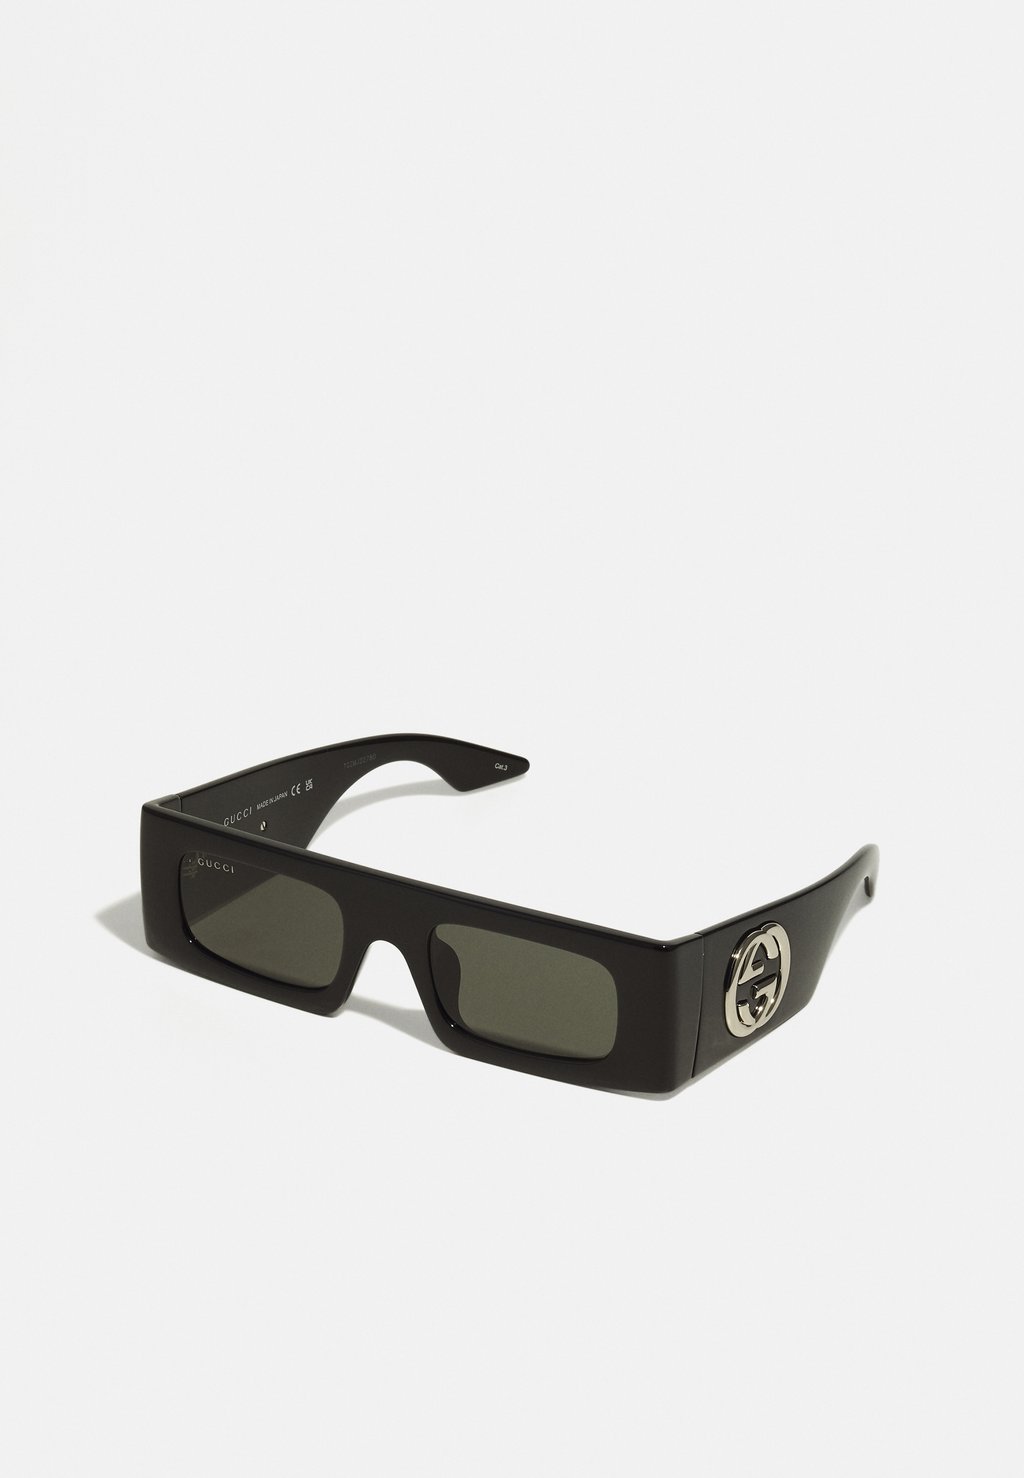 Солнцезащитные очки UNISEX Gucci, цвет black/grey солнцезащитные очки unisex gucci цвет black silver coloured